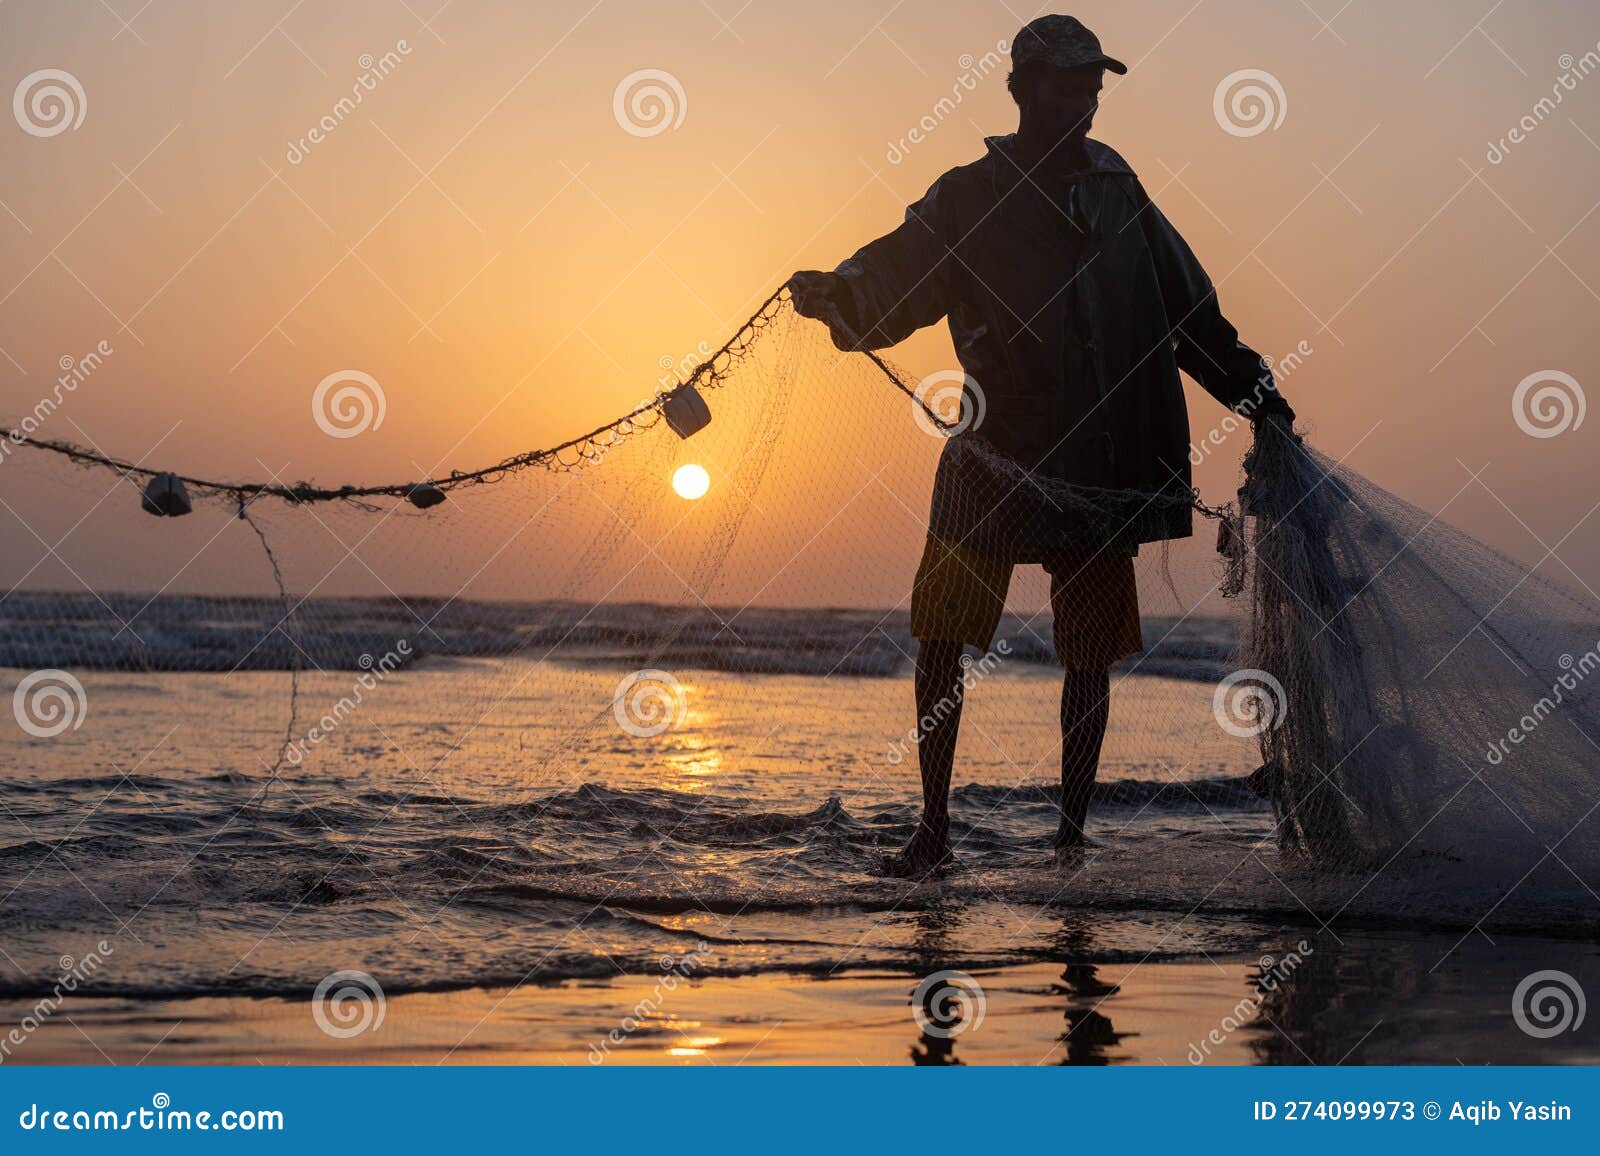 A Fisherman Preparing Fishing Net for Fishing Editorial Stock